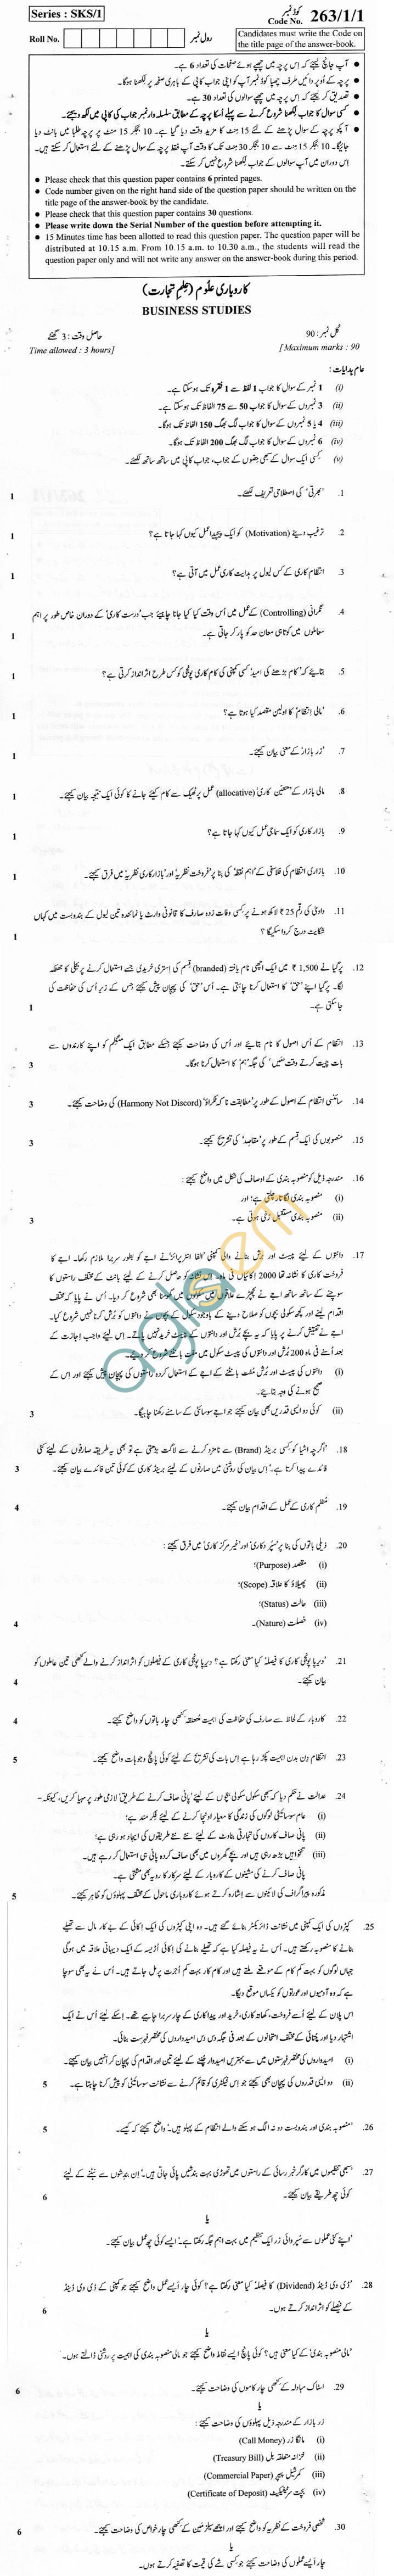 CBSE Board Exam 2013 Class XII Question Paper - Business Studies (Urdu Version)